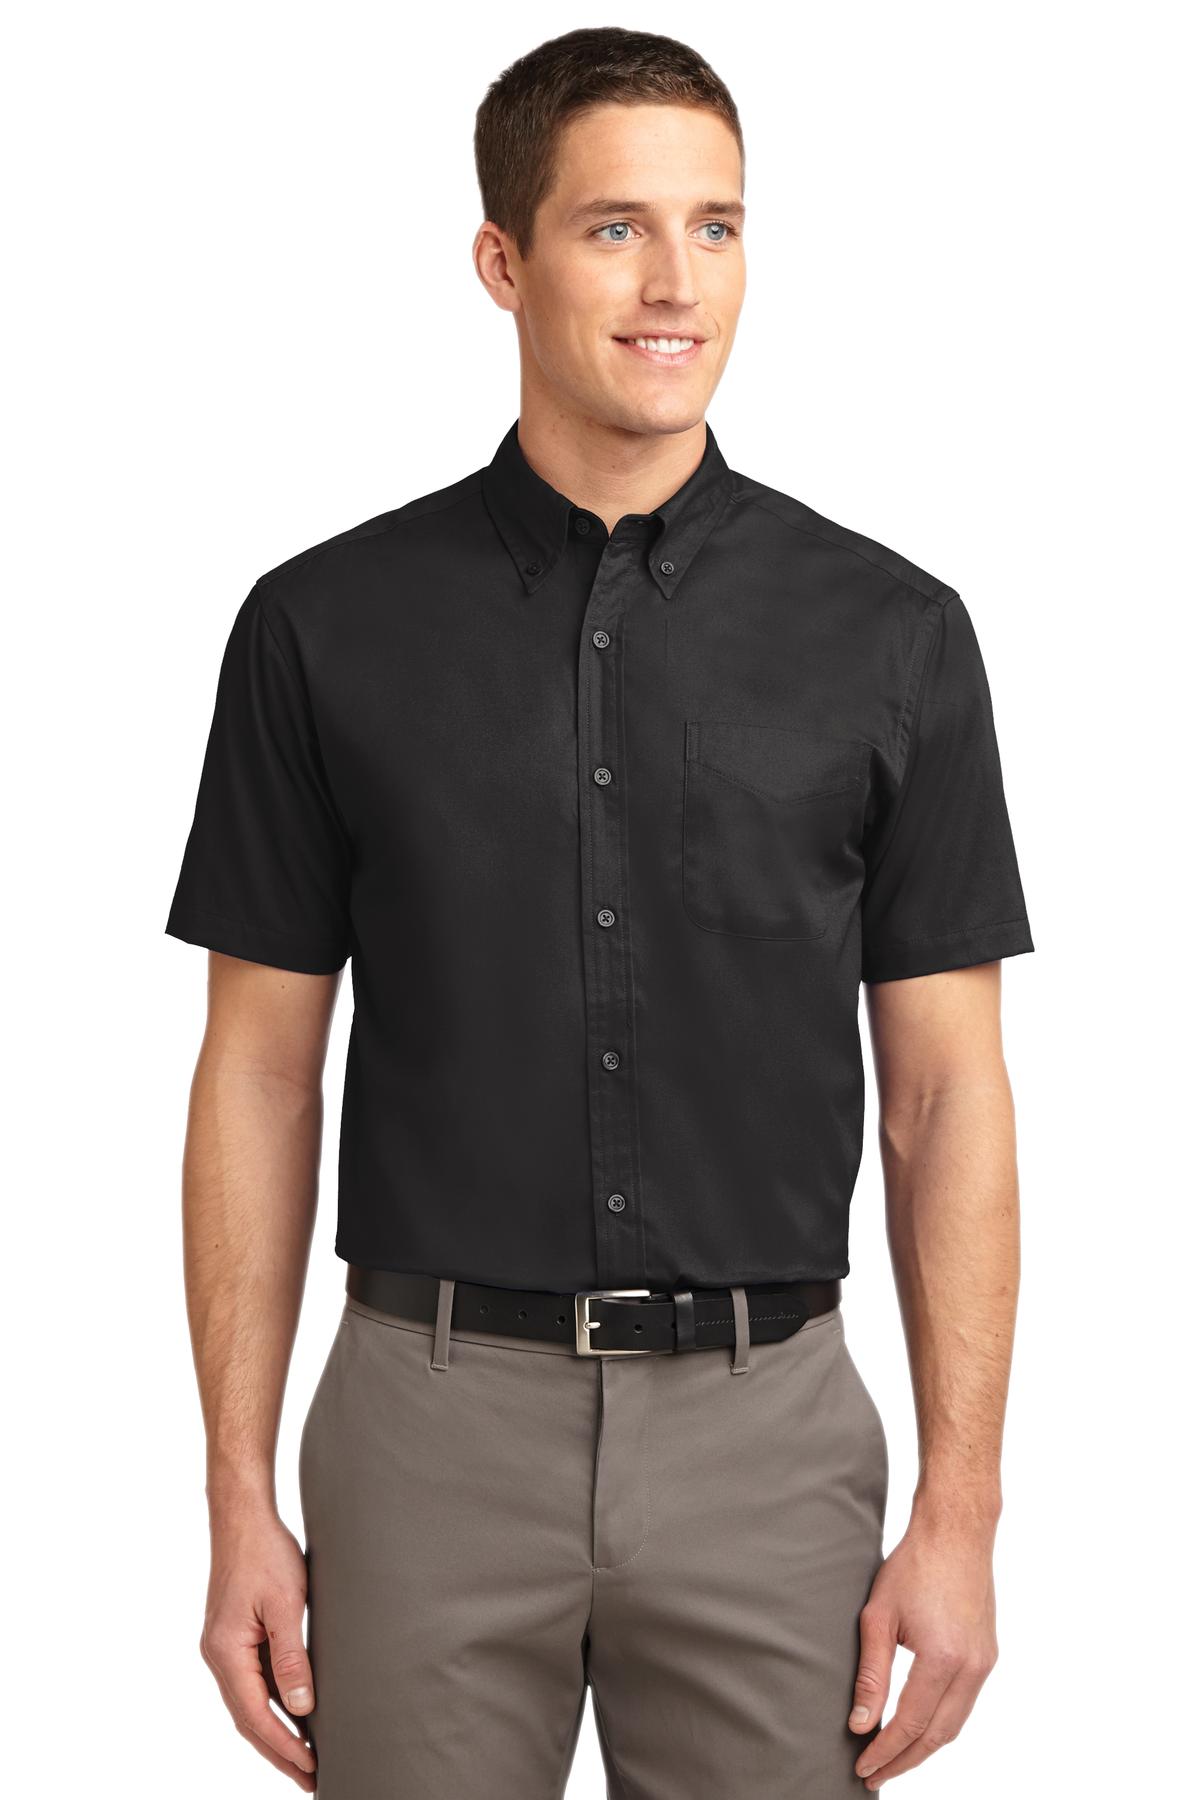 Port Authority Woven Shirts for Hospitality ® Short Sleeve Easy Care Shirt.-Port Authority